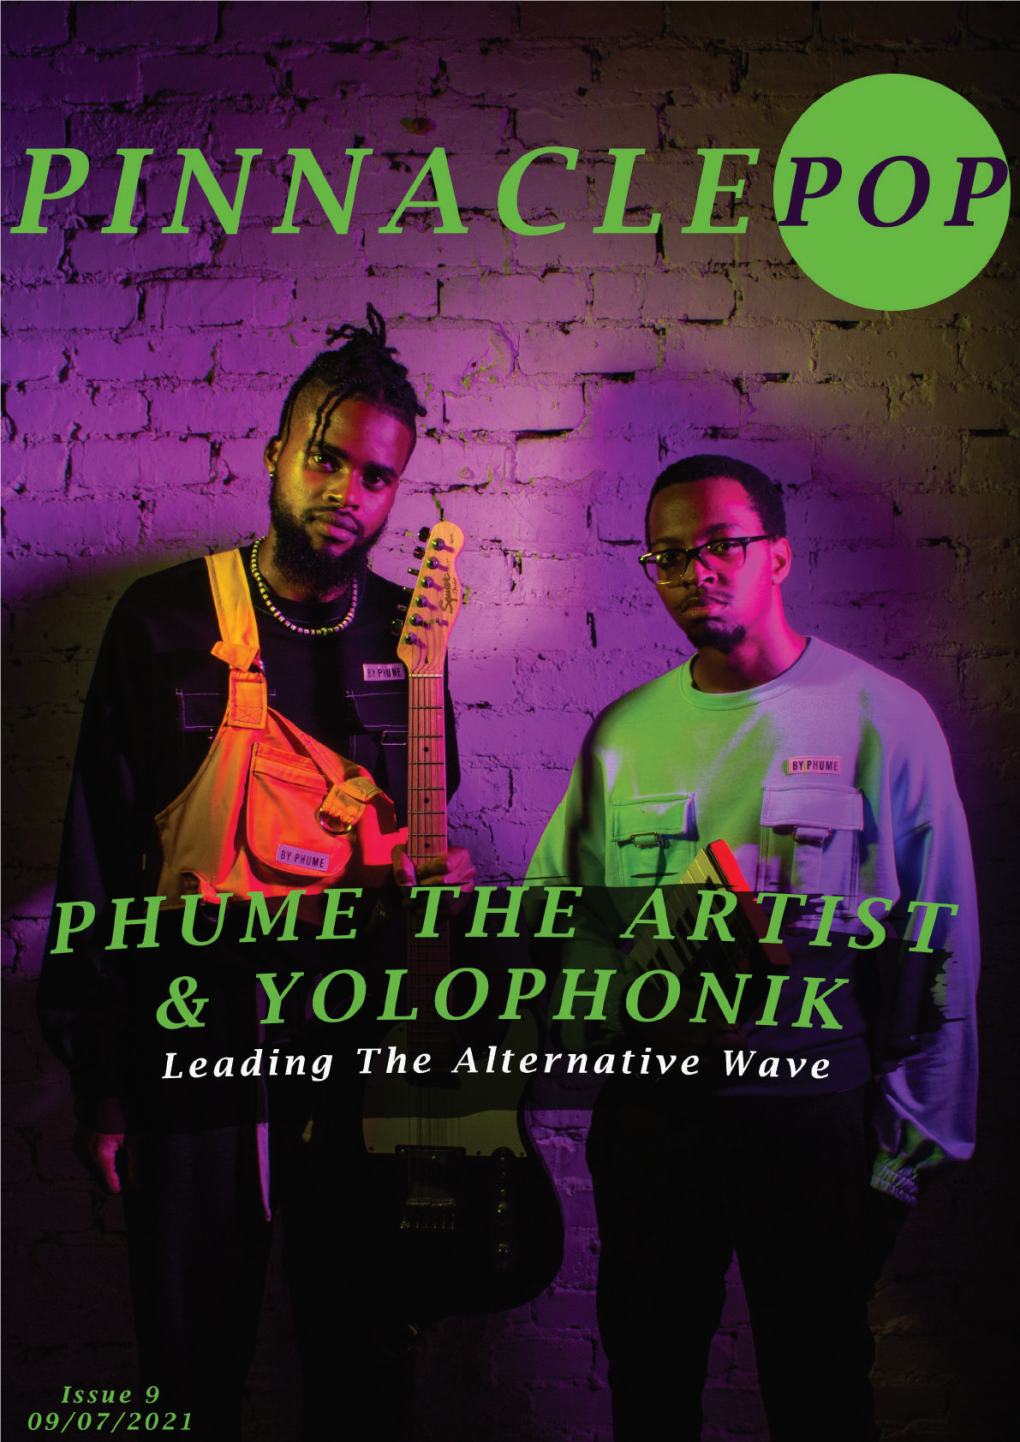 Yolophonik & Phume the Artist